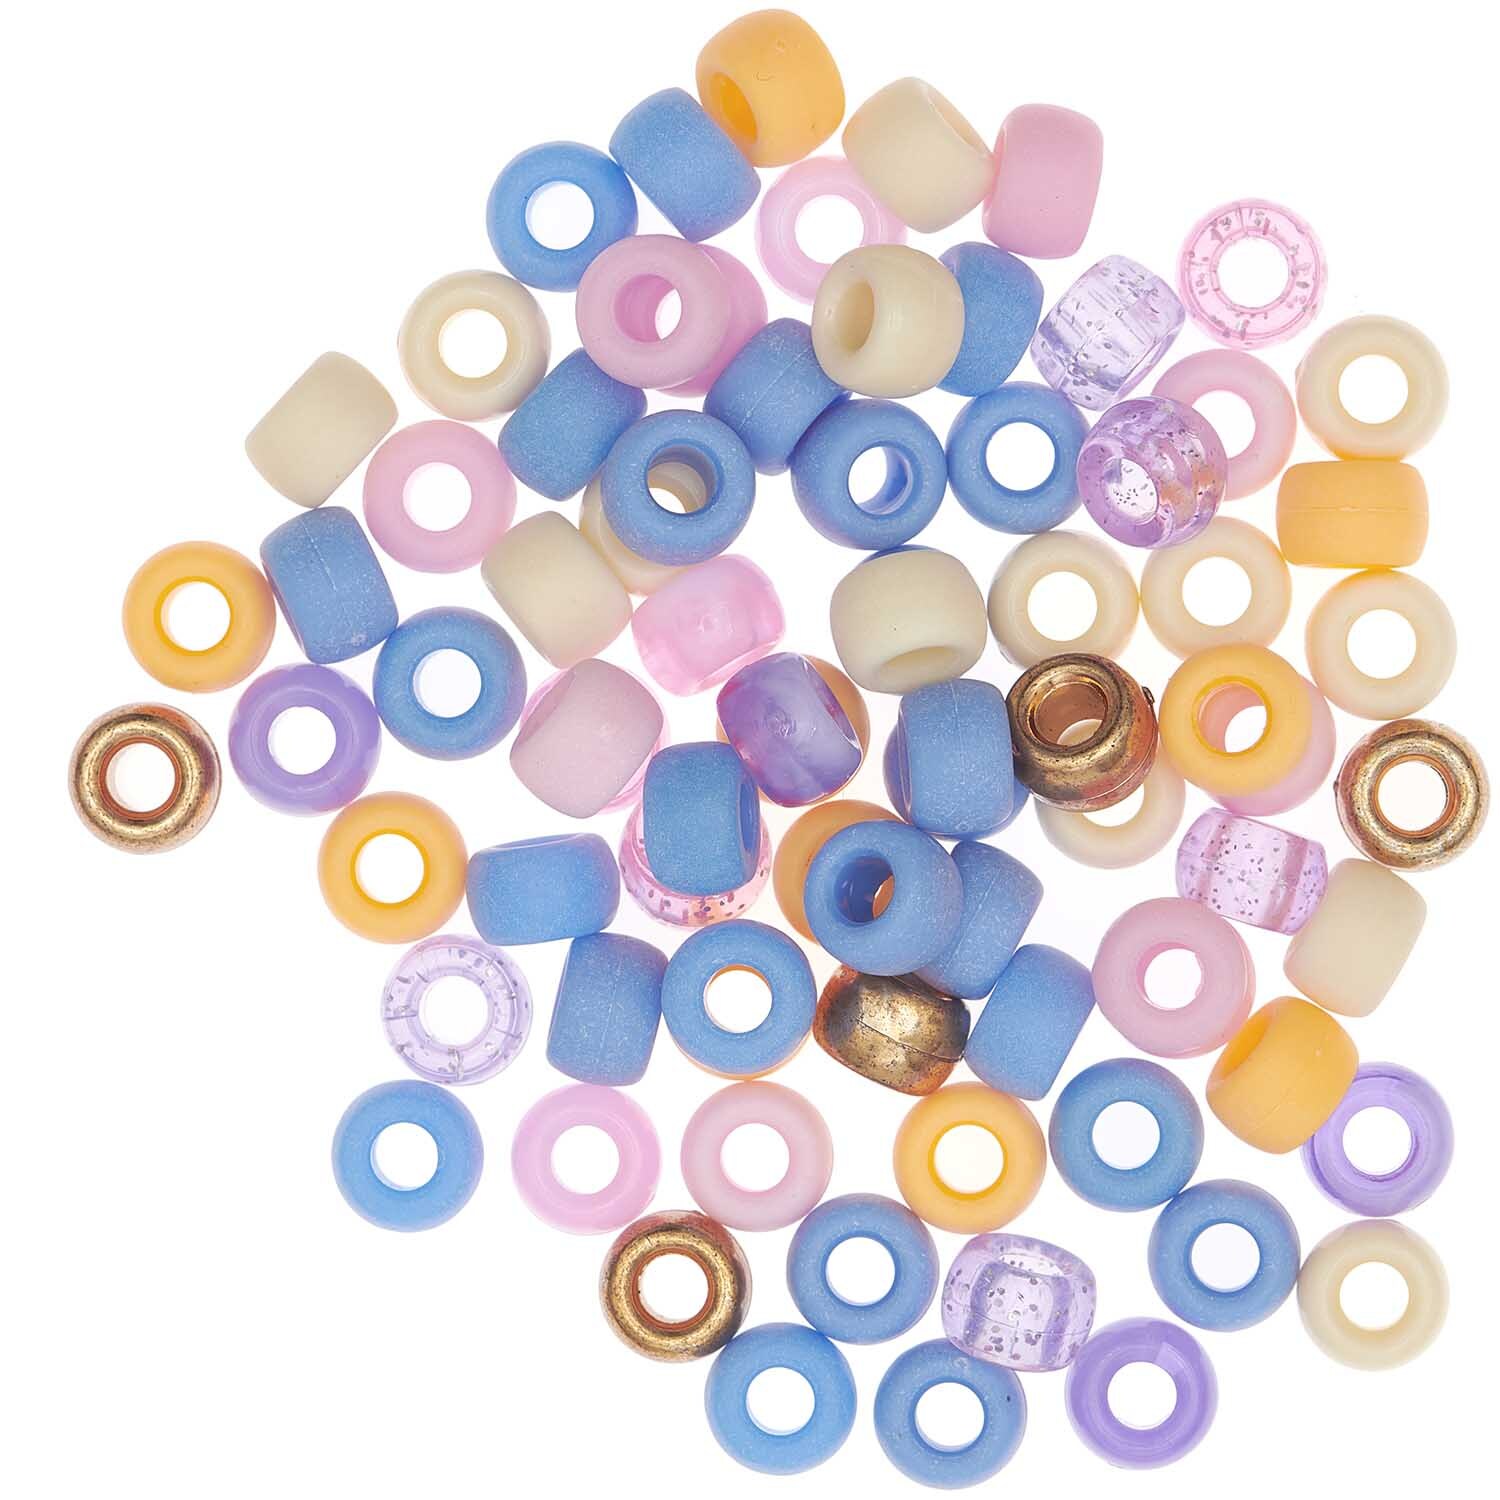 itoshii - Ponii Beads Pastell Mix 9x6mm 80 Stück